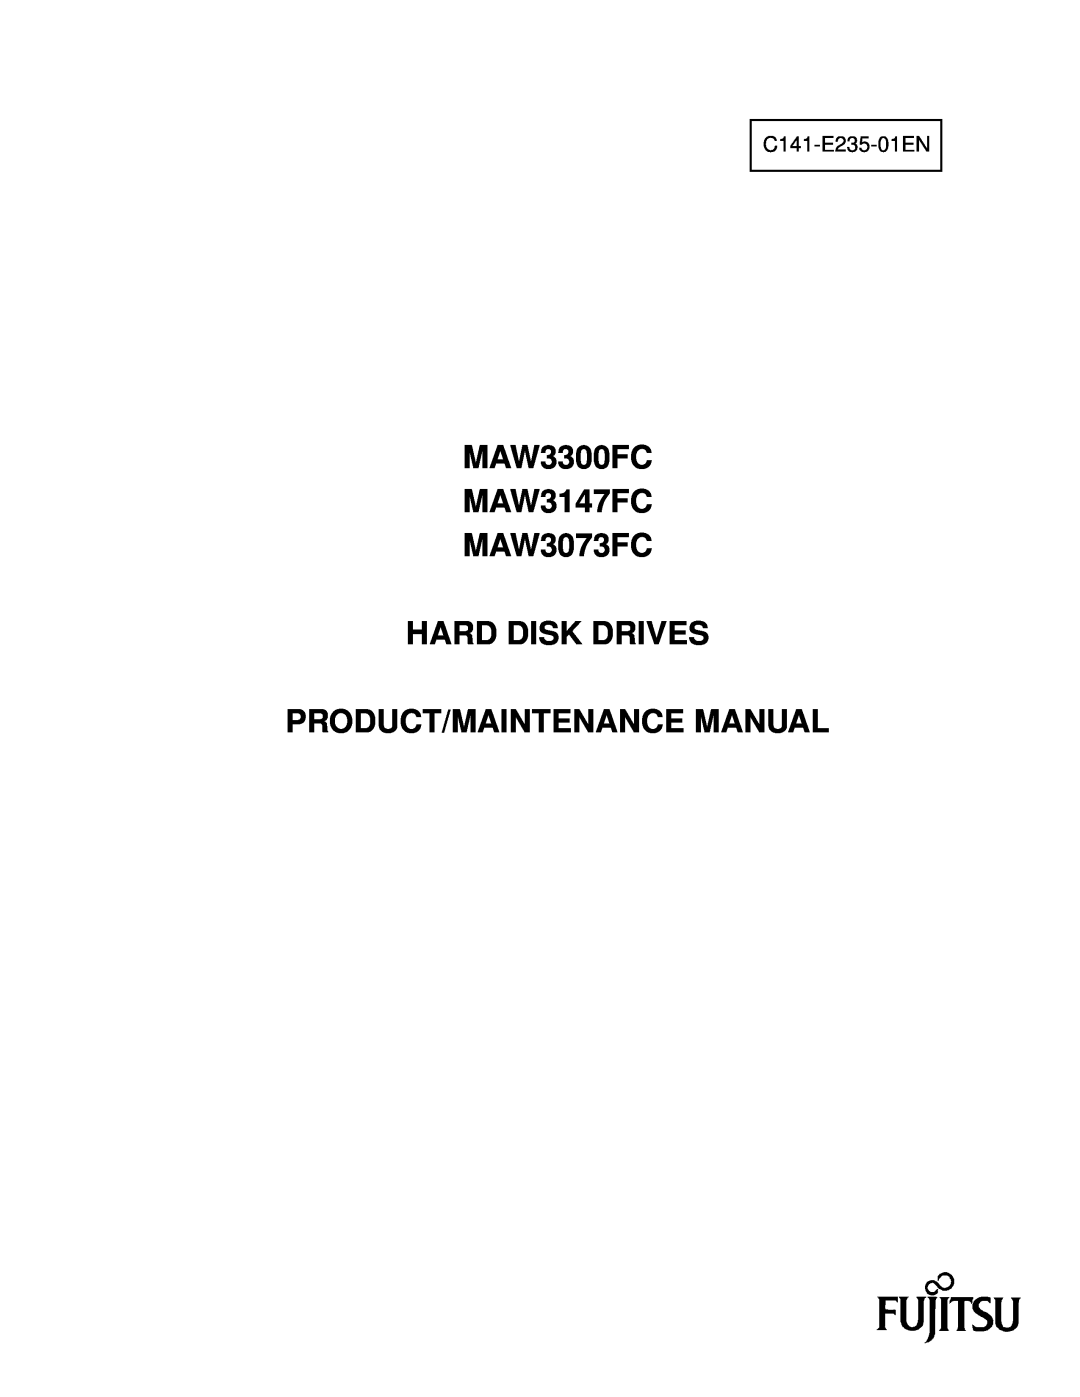 Fujitsu specifications MAW3300FC, MAW3147FC, MAW3073FC, Hard Disk Drives Installation Guide, C141-E233-01EN, Handling 